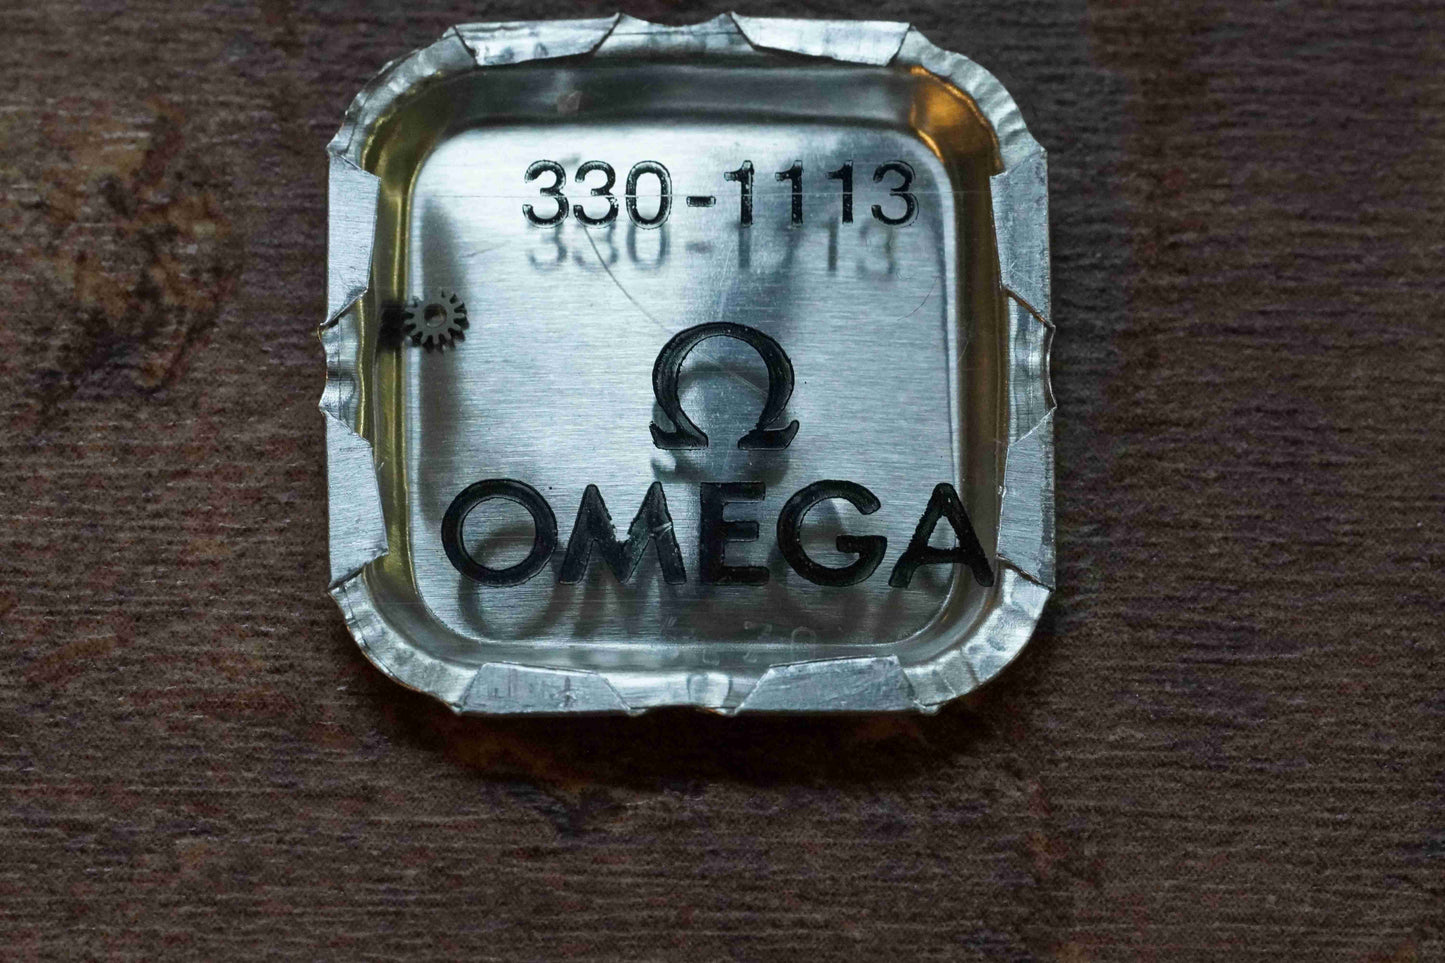 Omega cal 330 part 1113 Setting wheel